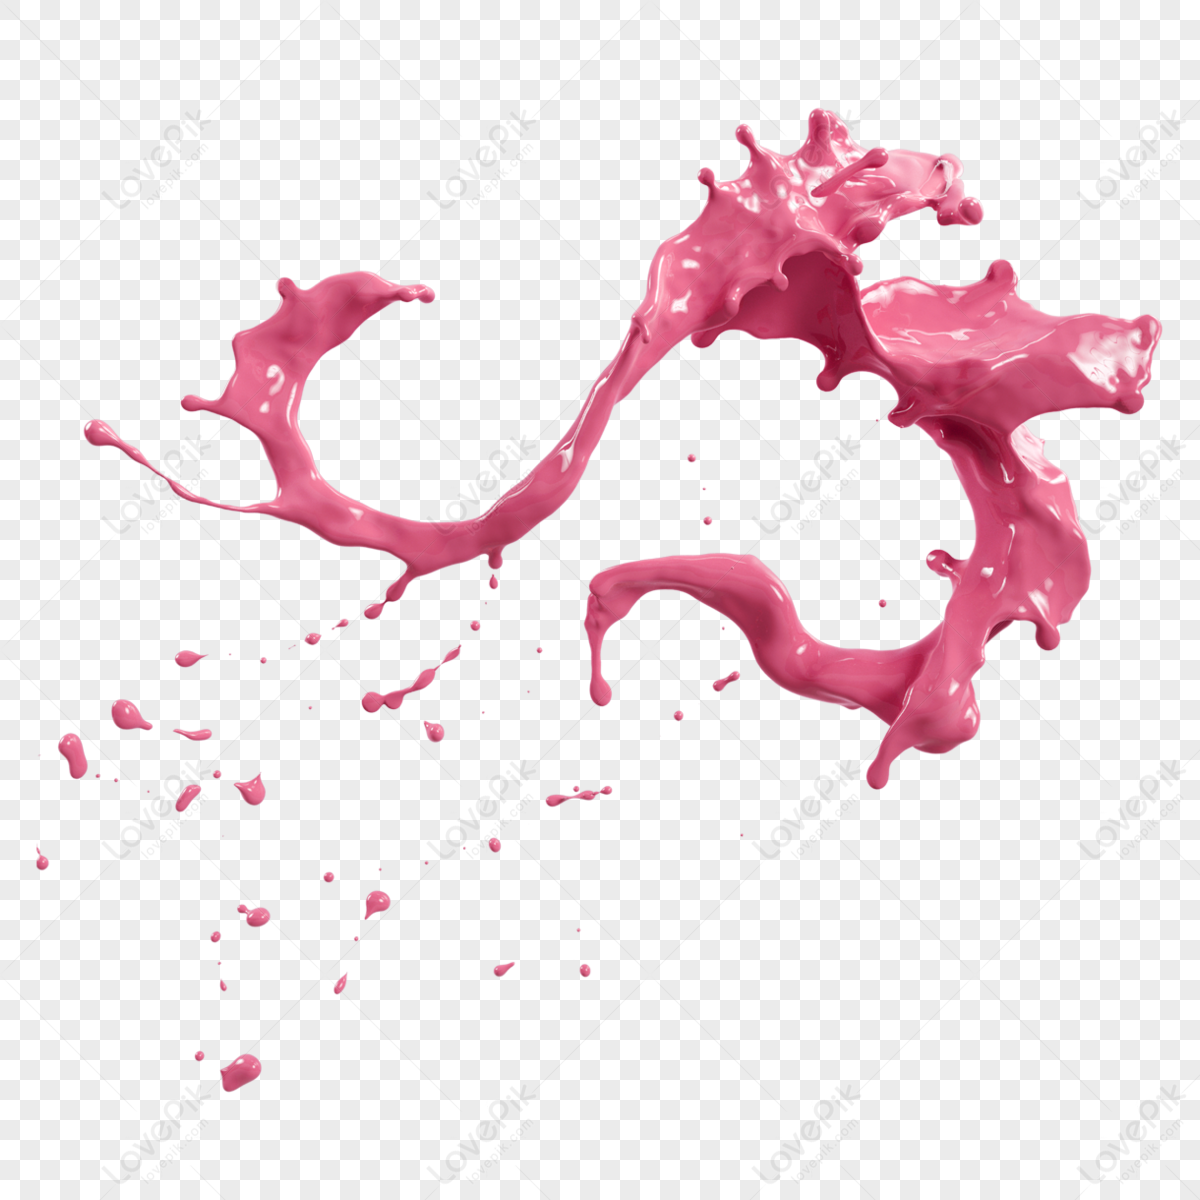 Pink Splash PNG Images With Transparent Background